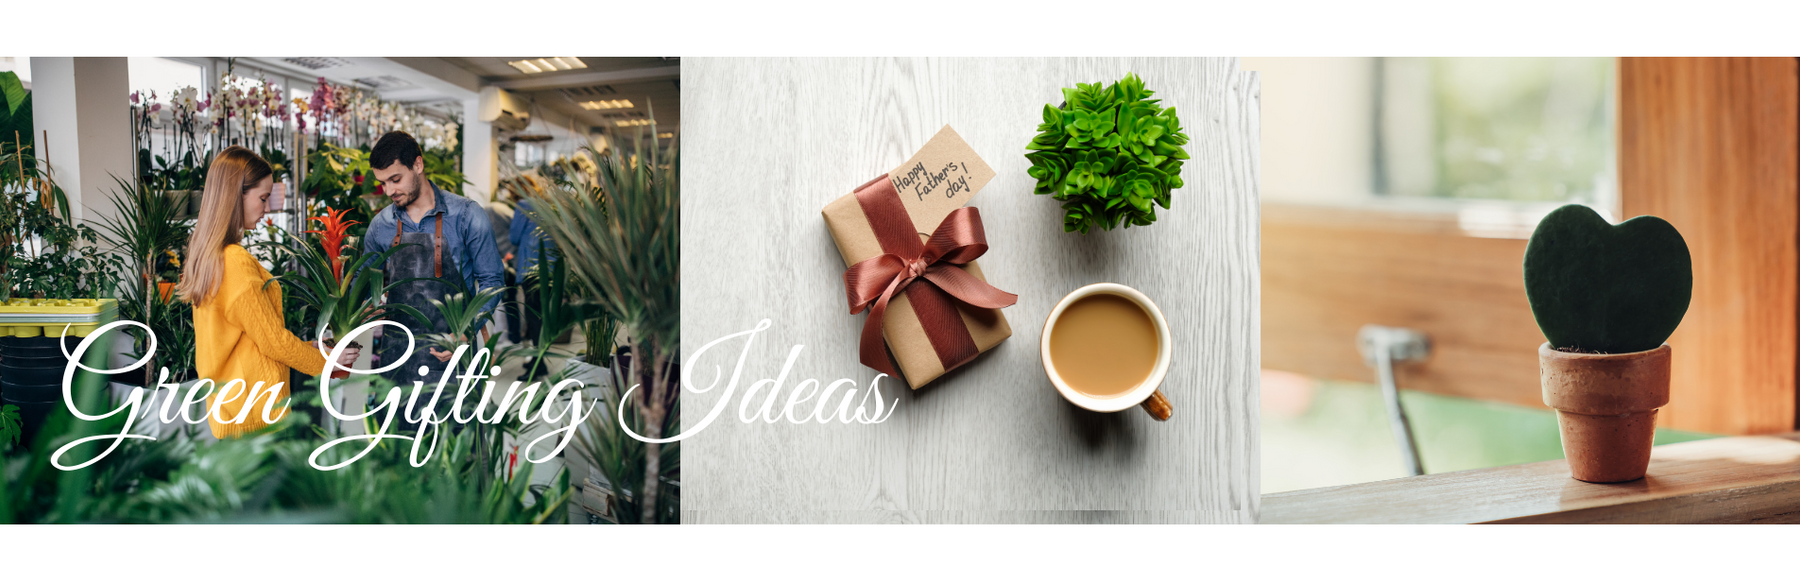 Green Gift Ideas - 5 Plants - CGASPL